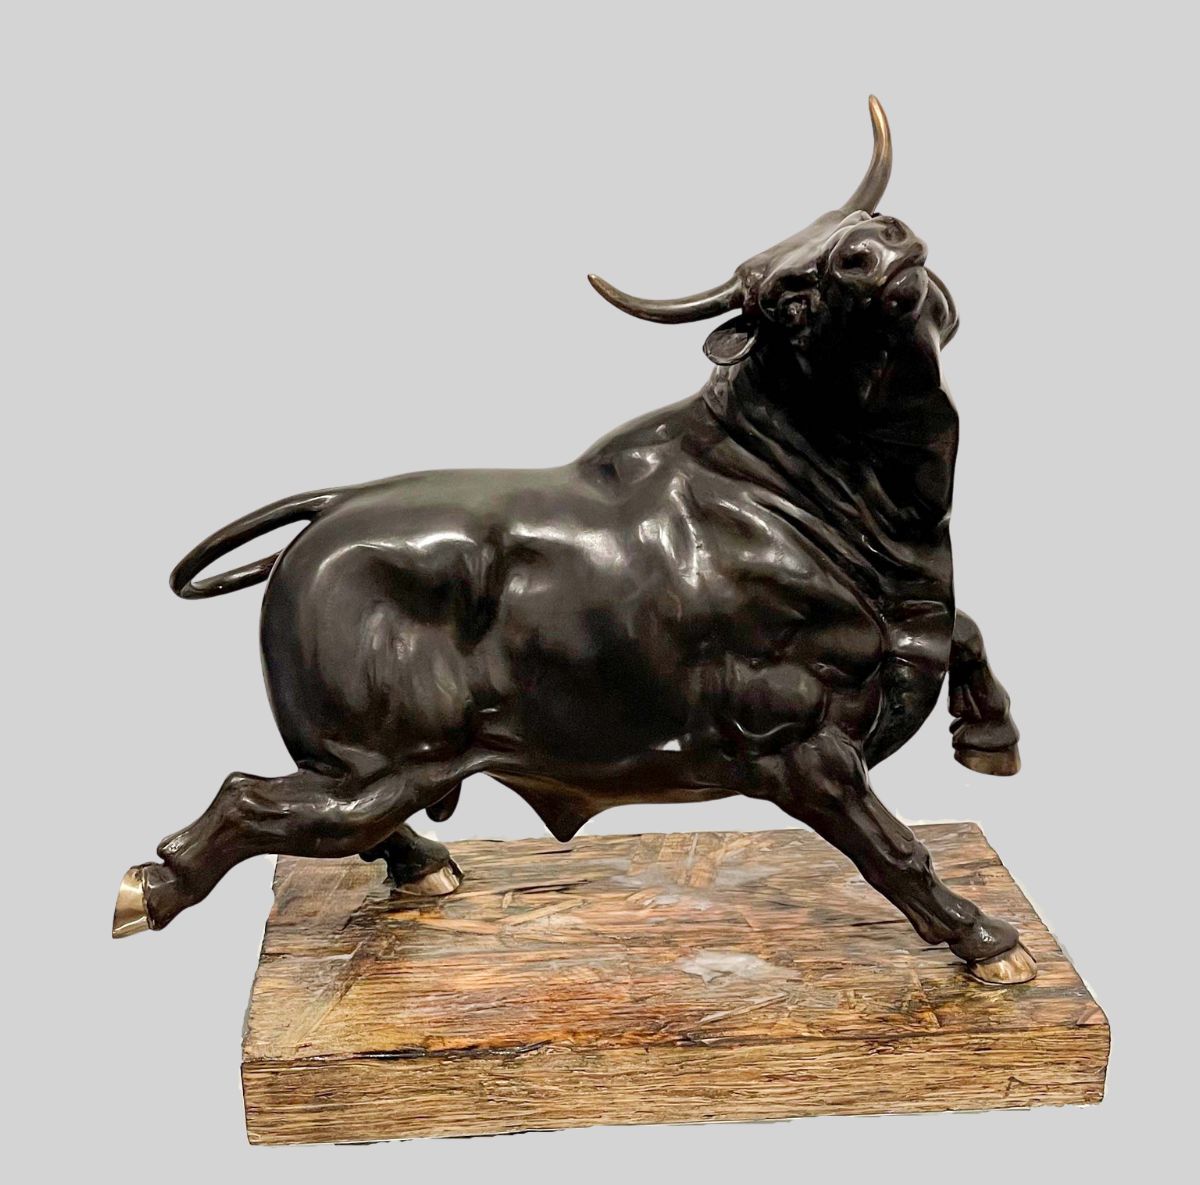 Contemporary Sculpture. Title: Running Bull, Bronze, 20x10x20 in by Contemporary Canadian artist Tariq Kakar.